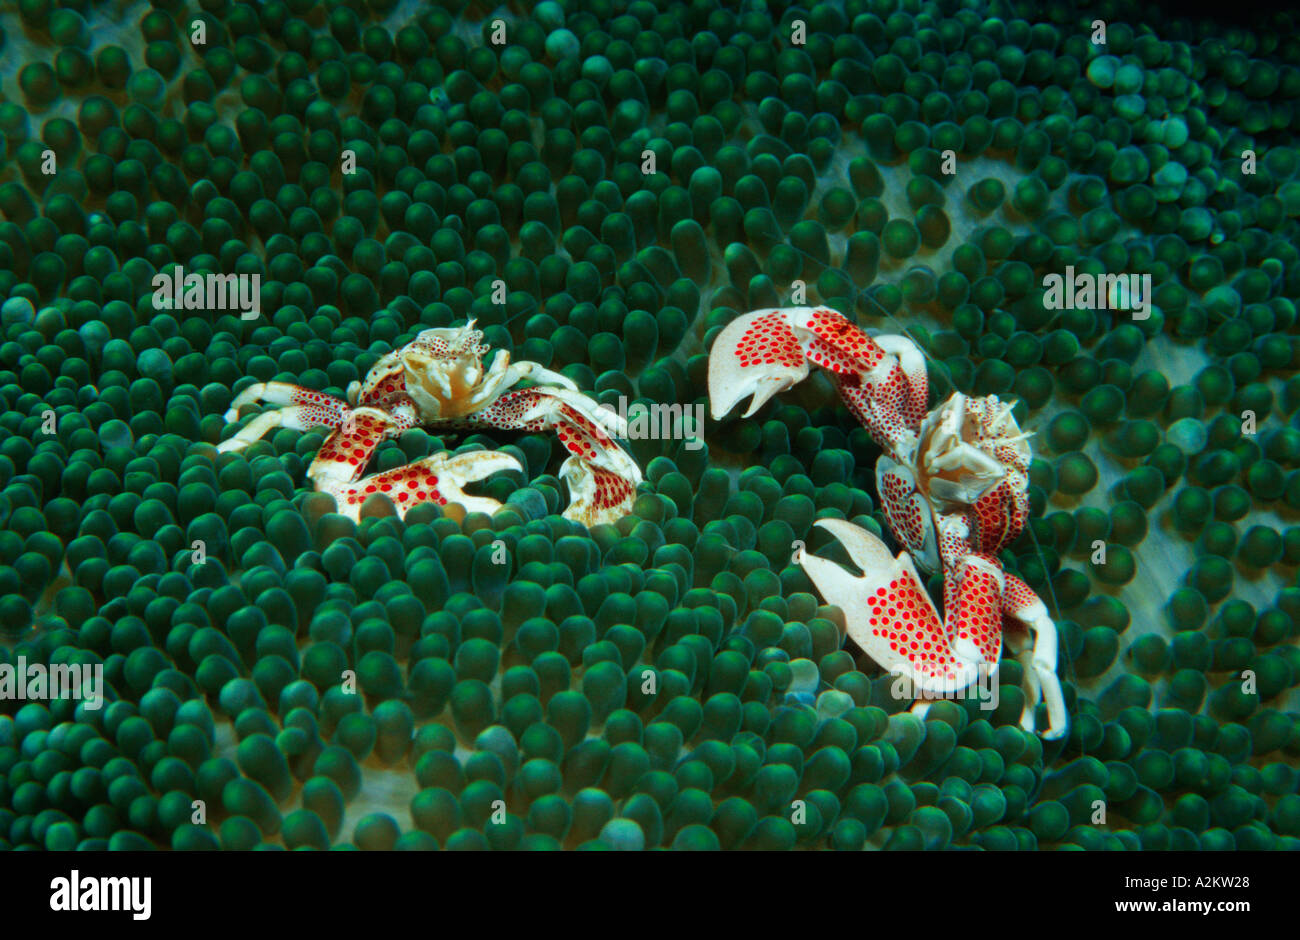 Porcelain crabs in sea anemone, Neopetrolisthes oshimai Stock Photo